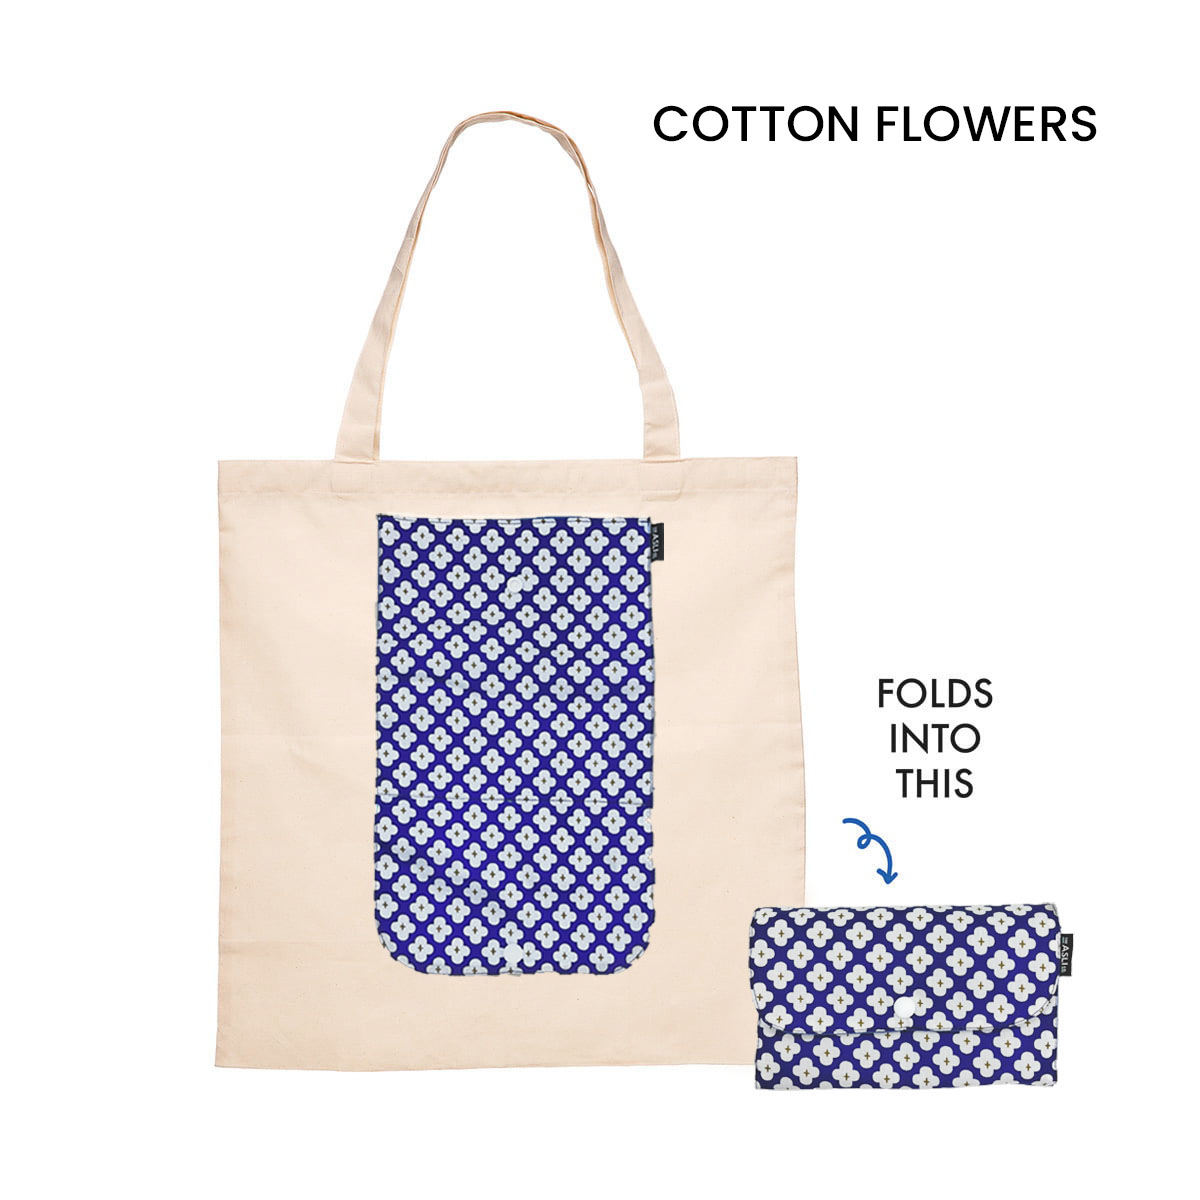 Cotton Flowers - The Asli Co. Eco-friendly Reusable Tote Bag